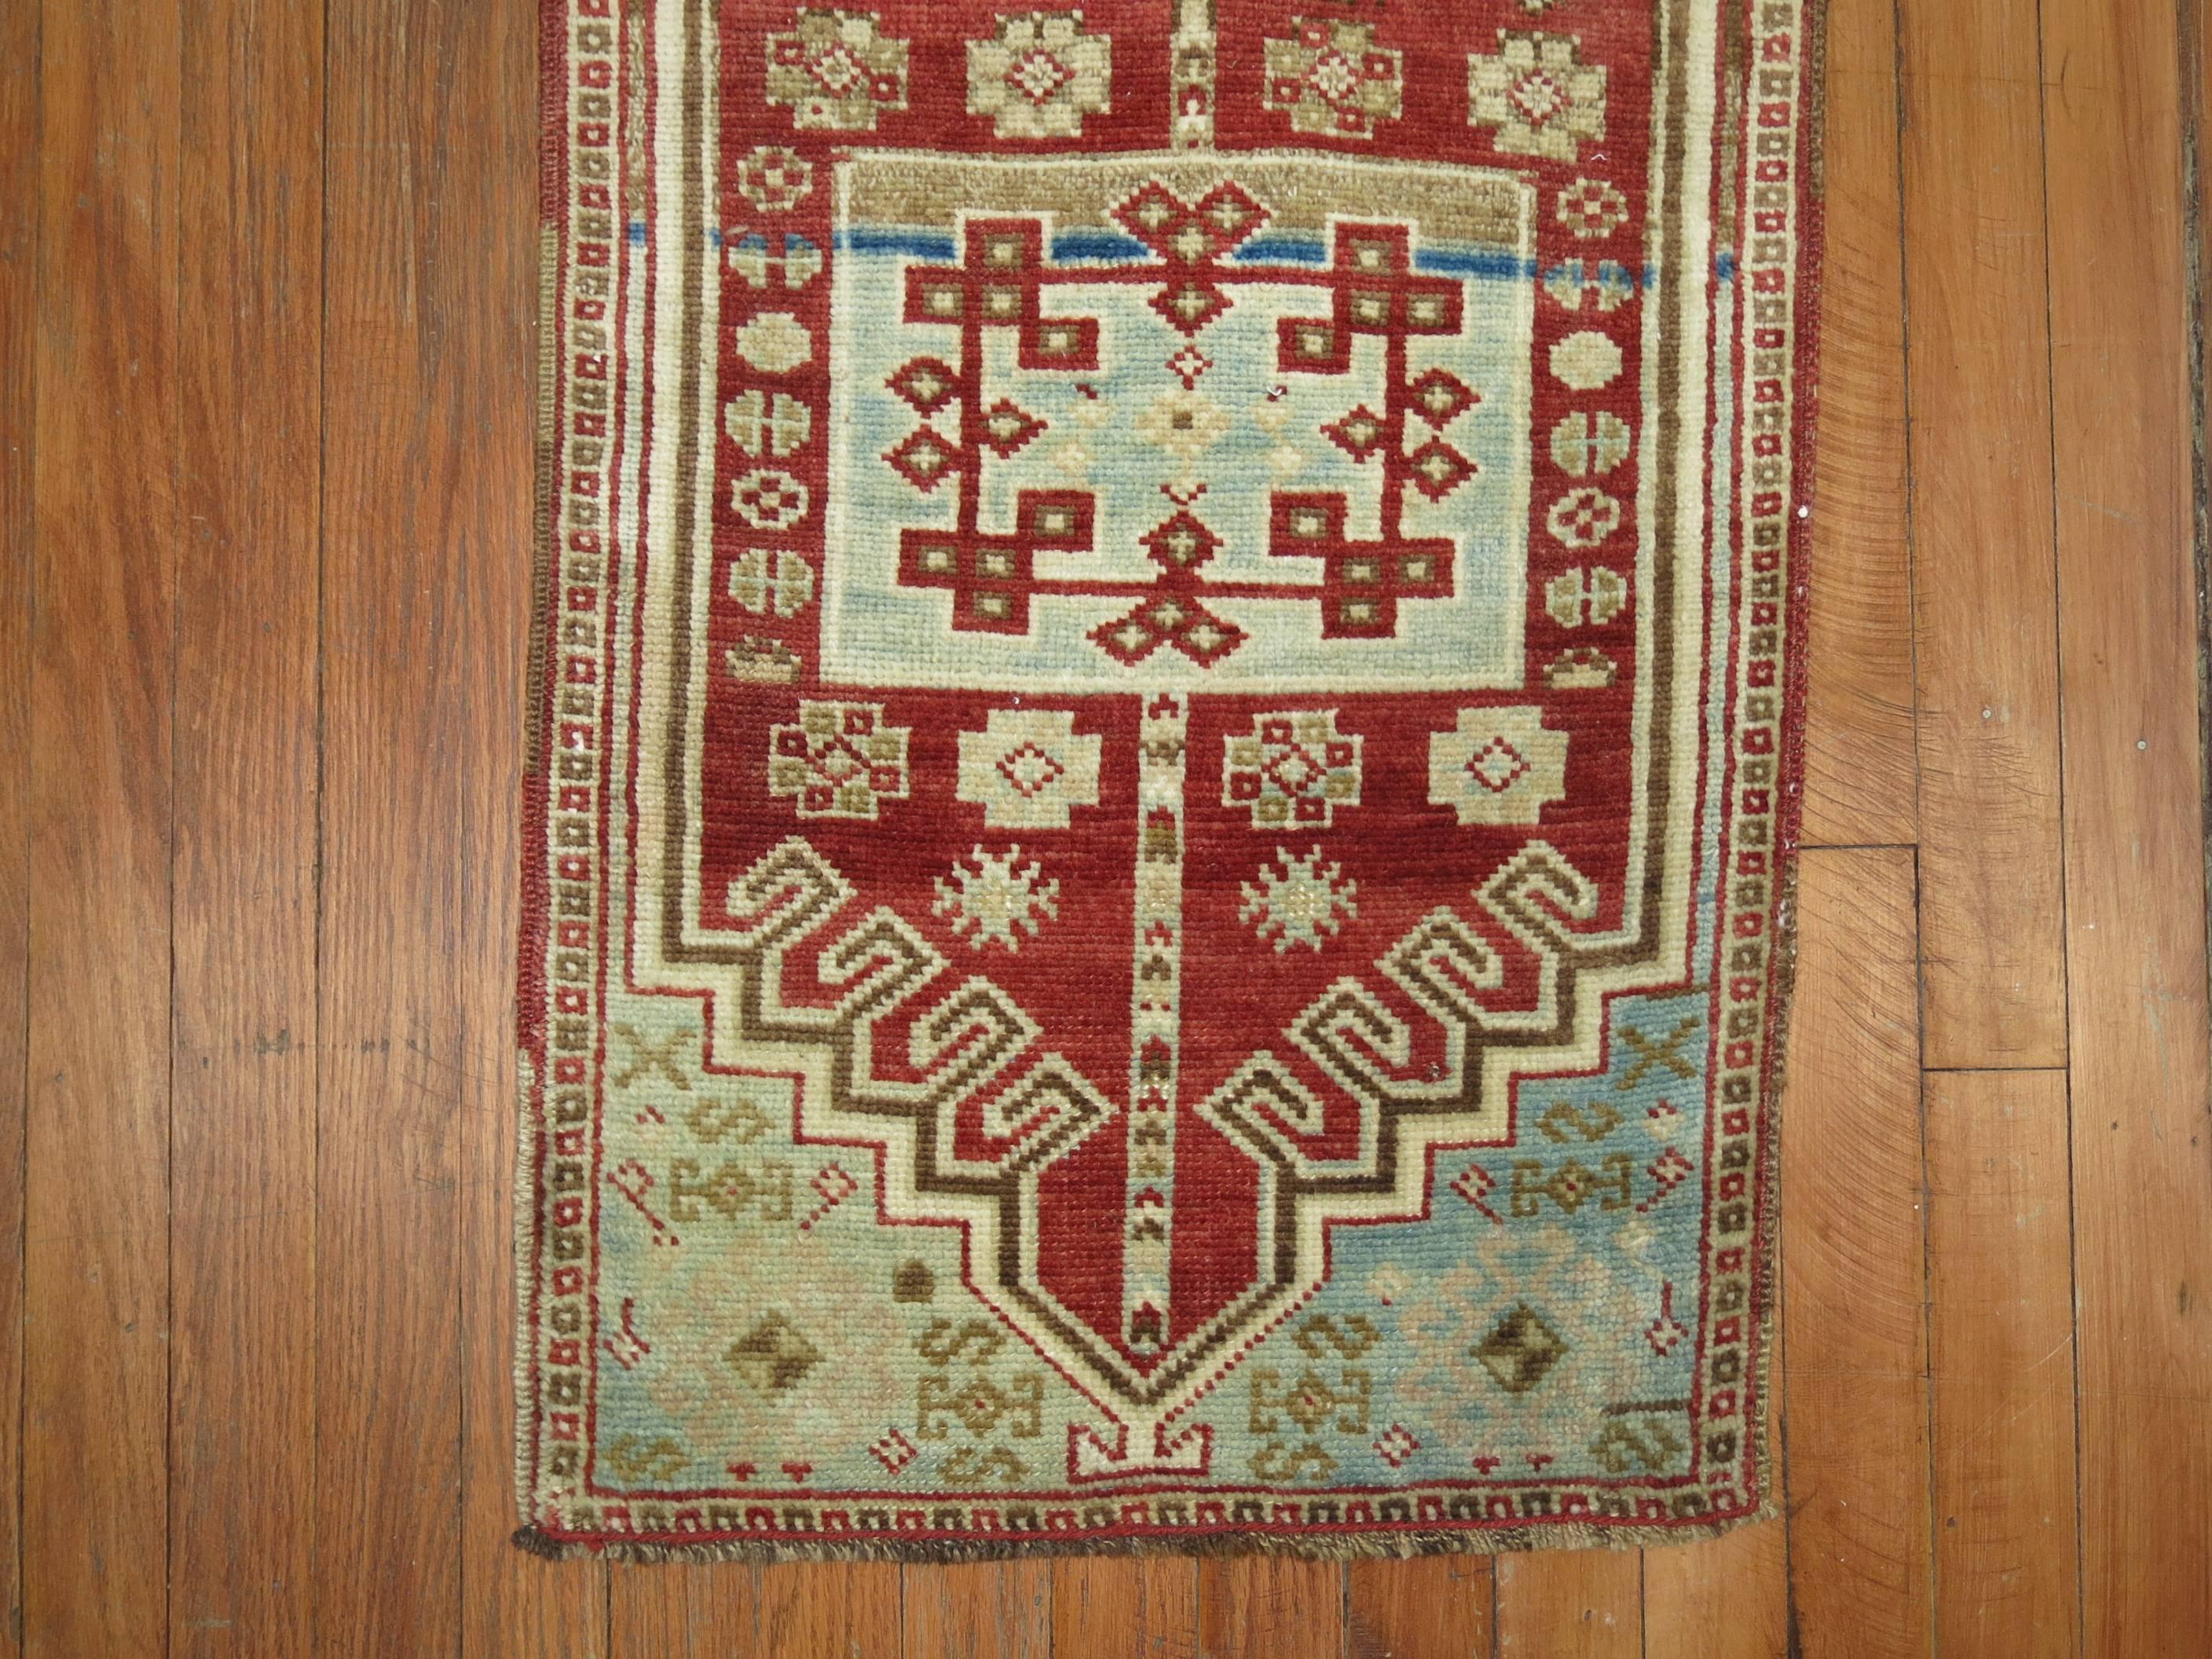 Geometric Turkish anatolian rug in quirky colors.